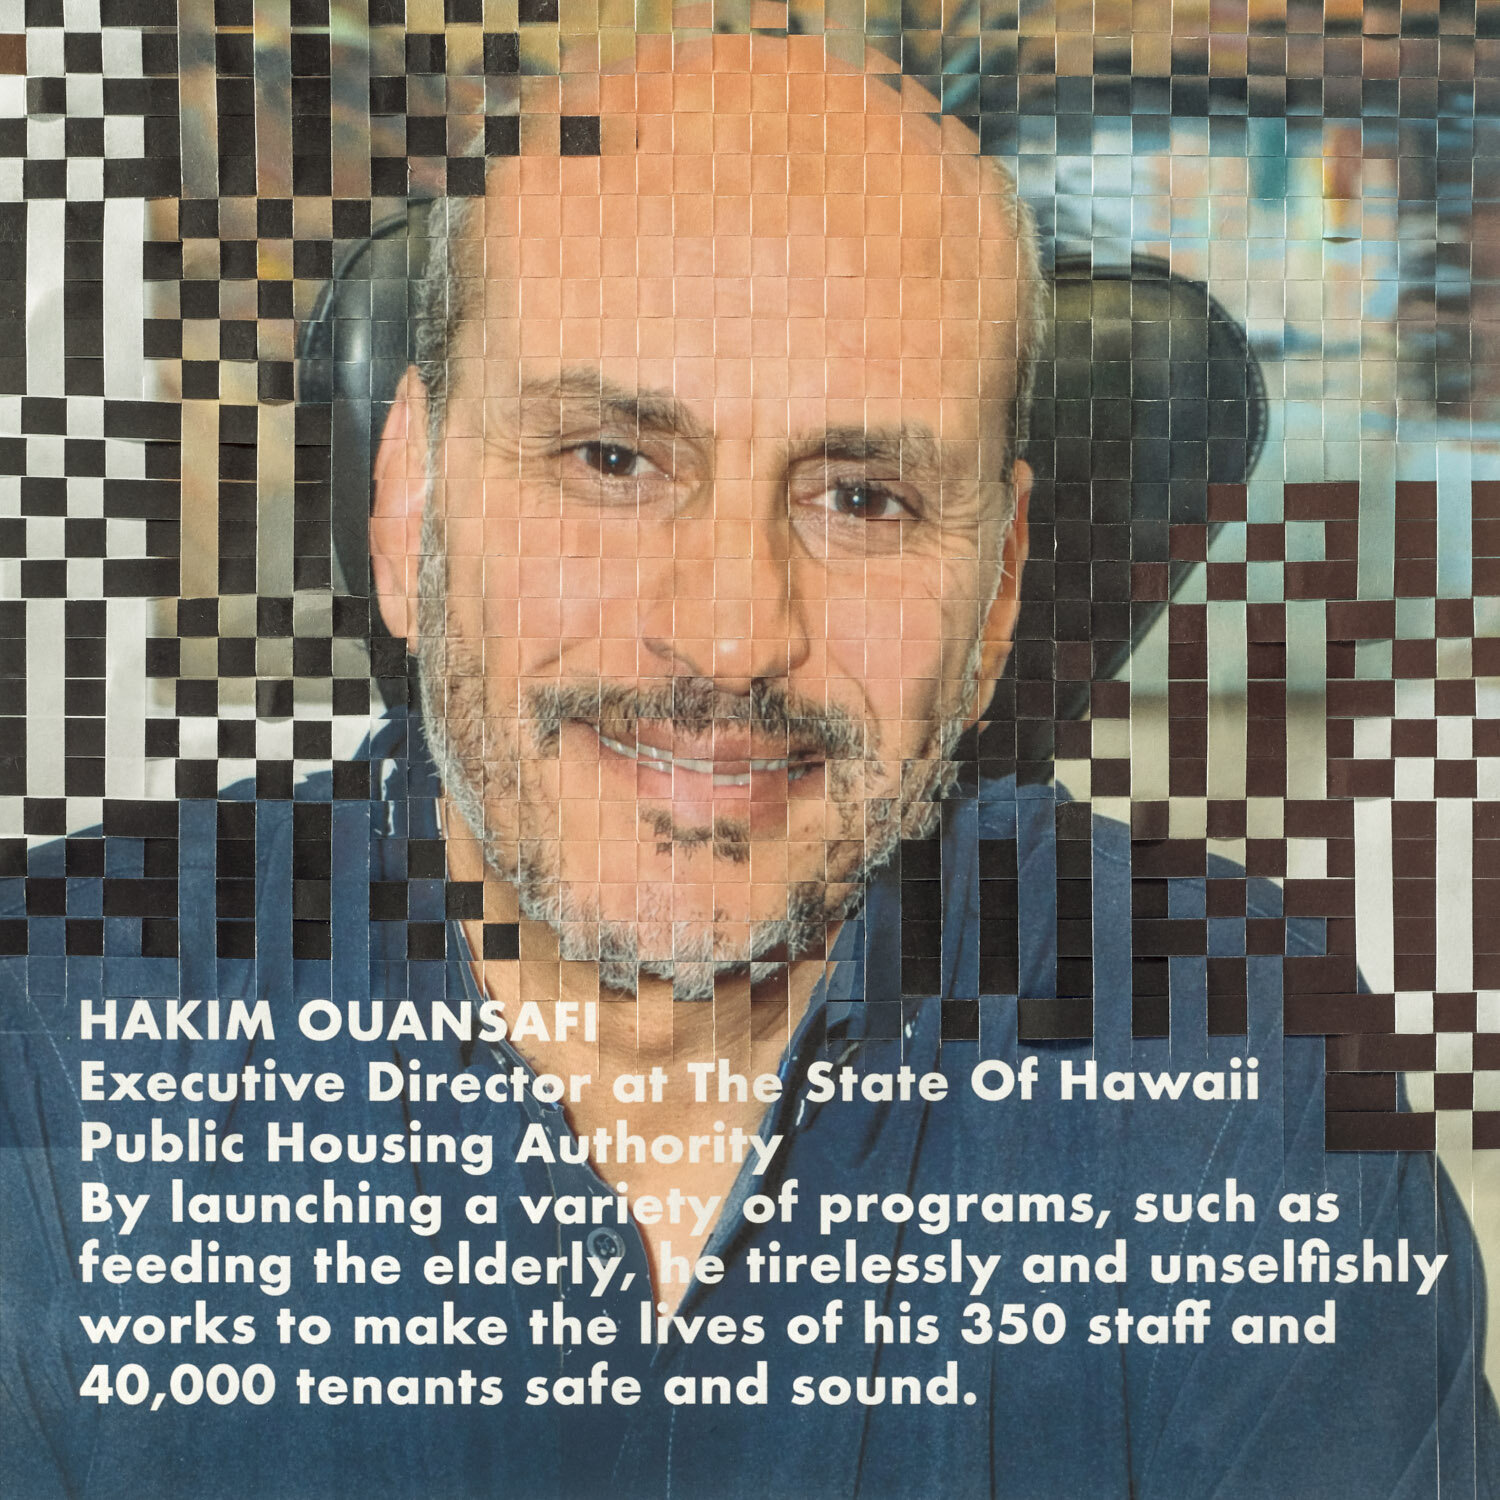 Day 08: Hakim Ouansafi